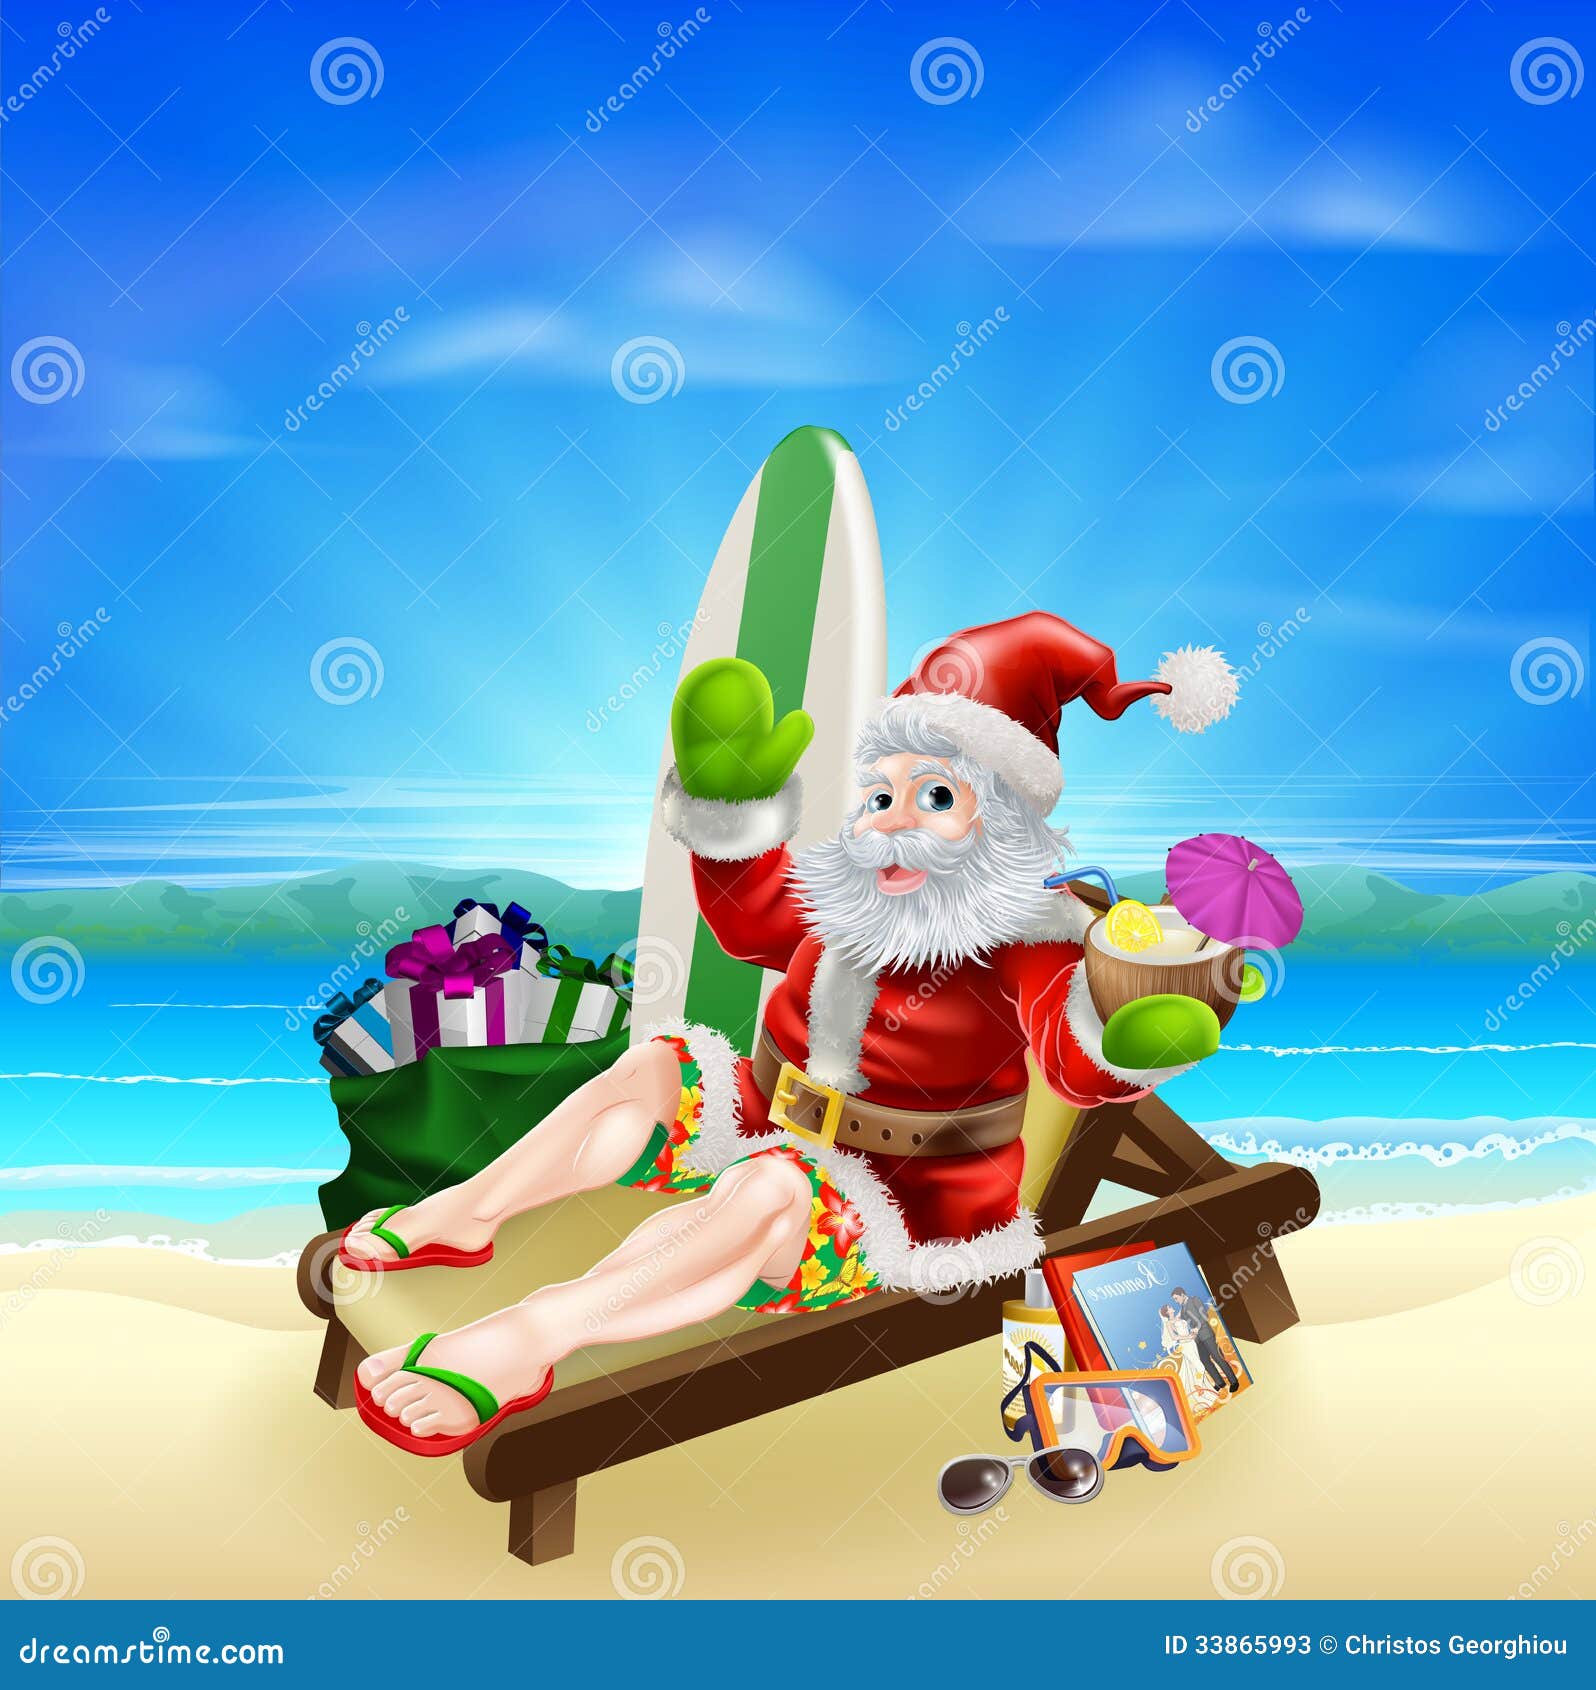 free clipart santa on the beach - photo #44